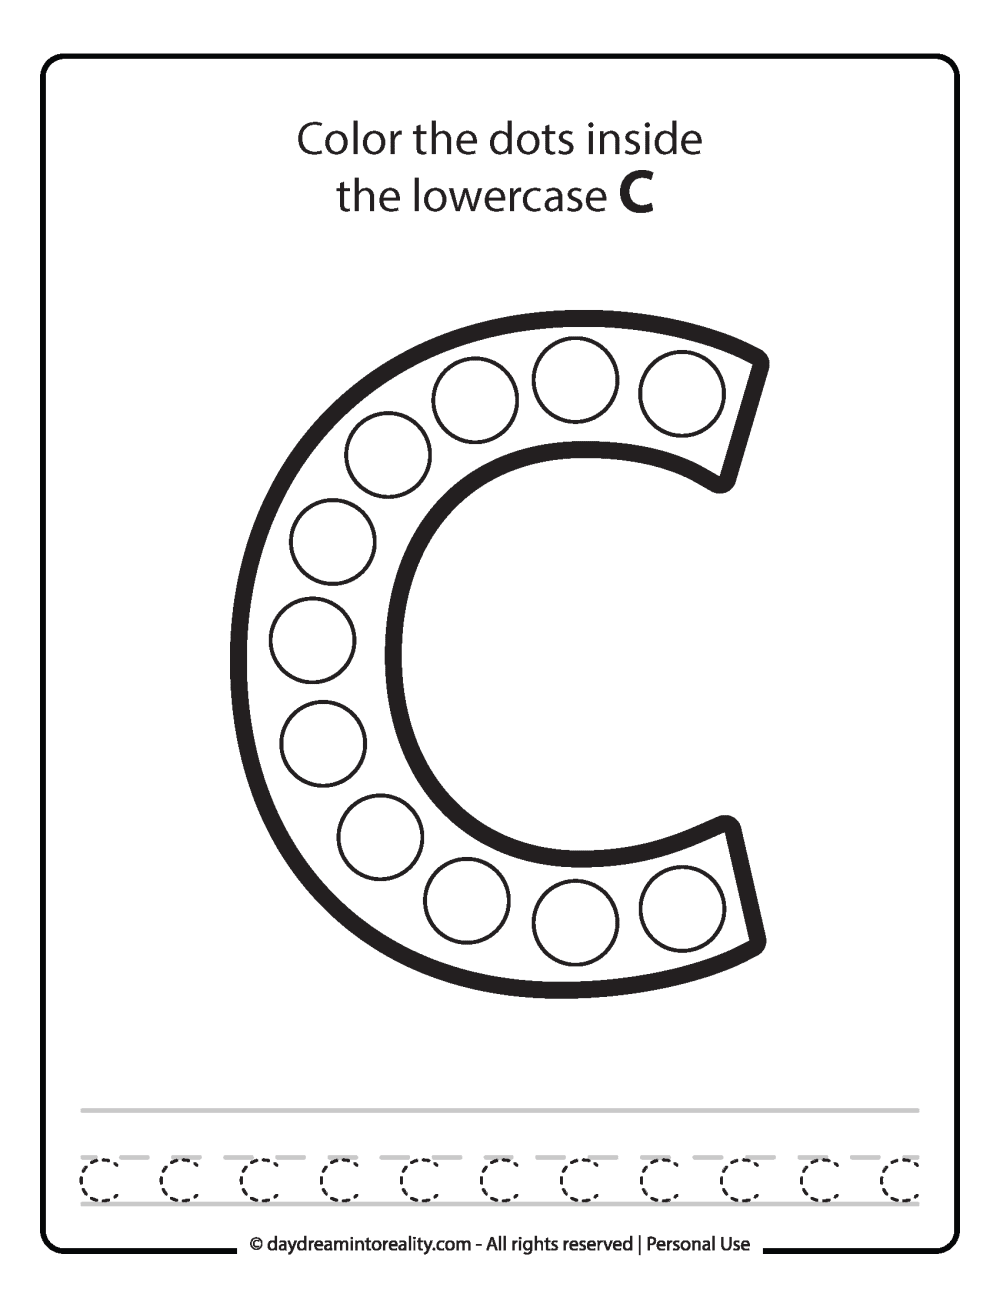 Lowercase "c" Dot Marker Worksheet Free Printable activity for kids (preschool, kindergarten)